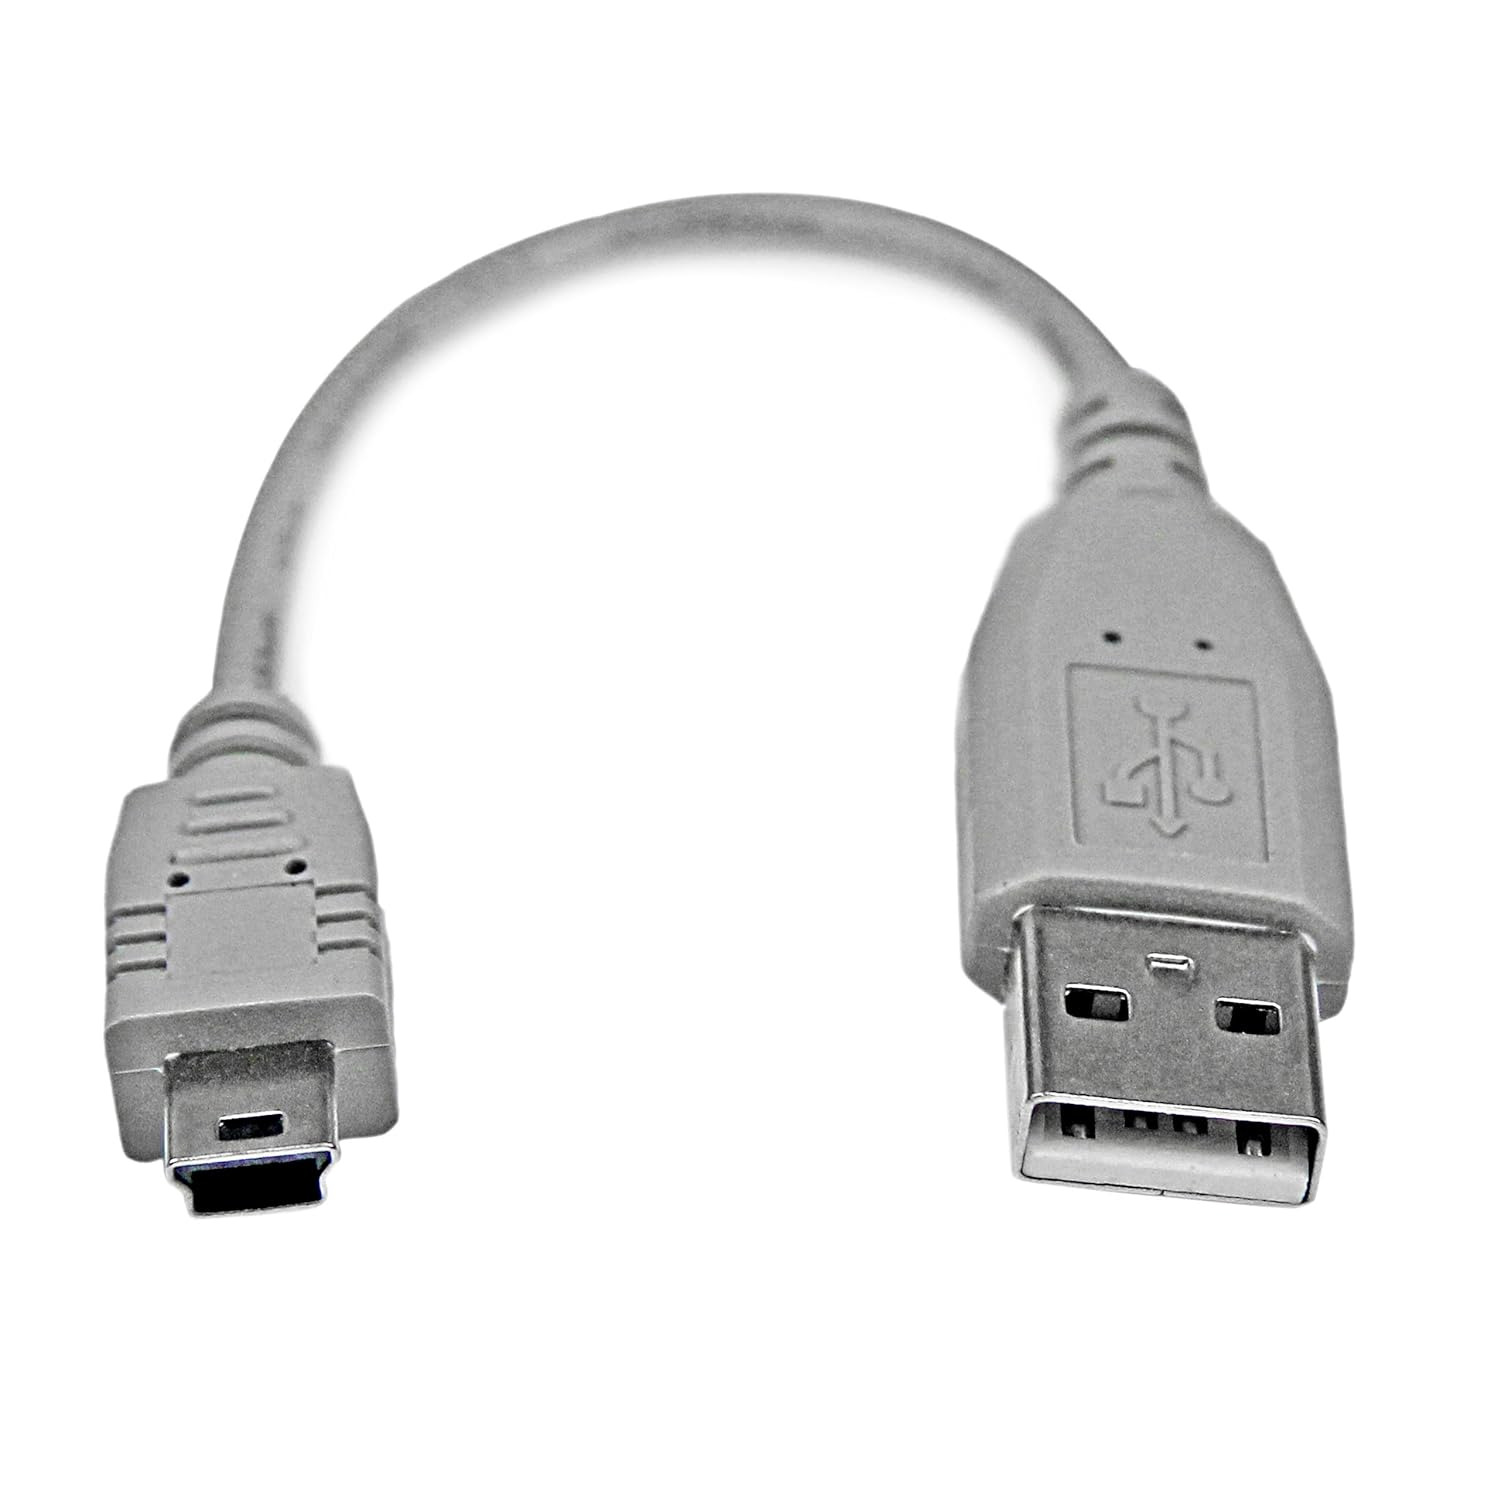 StarTech.com 6 in. USB to Mini USB Cable - USB 2.0 A to Mini B - Gray - Mini USB